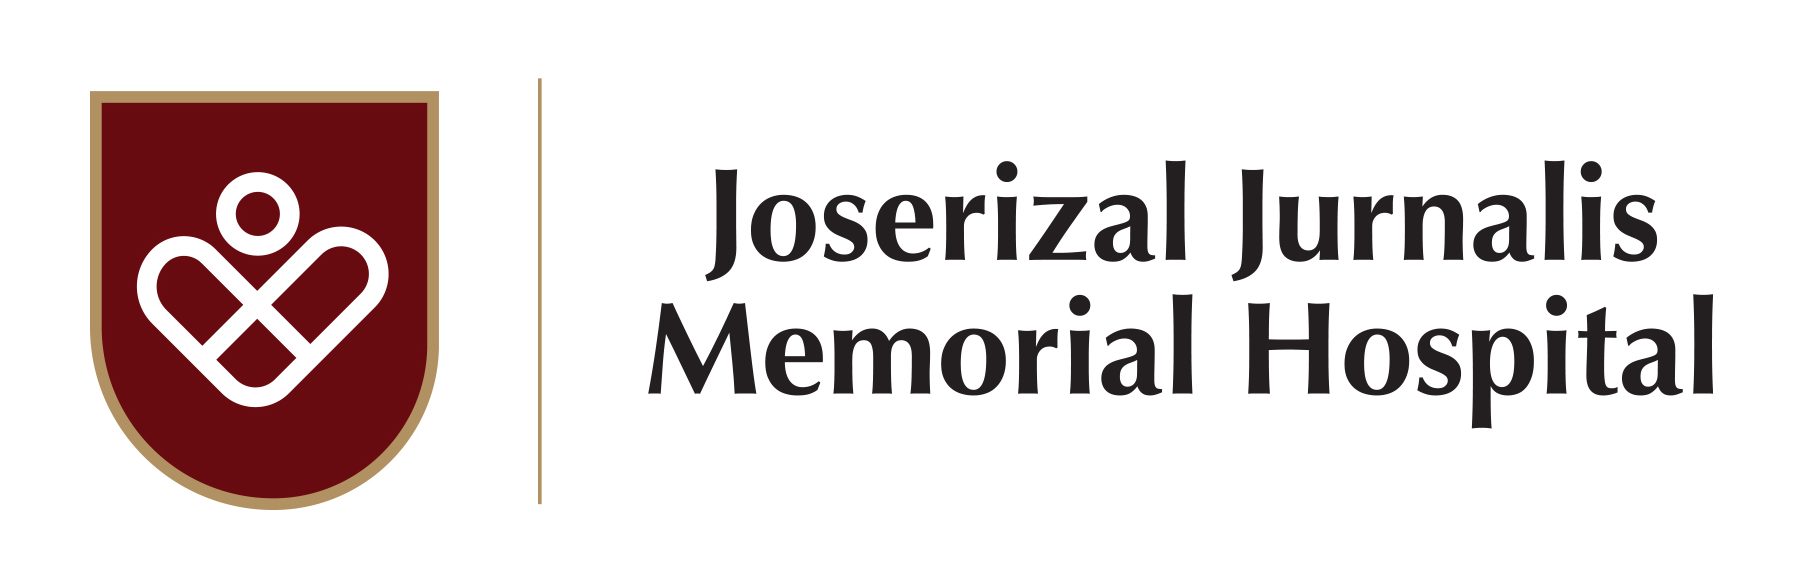 Joserizal Jurnalis Memorial Hospital